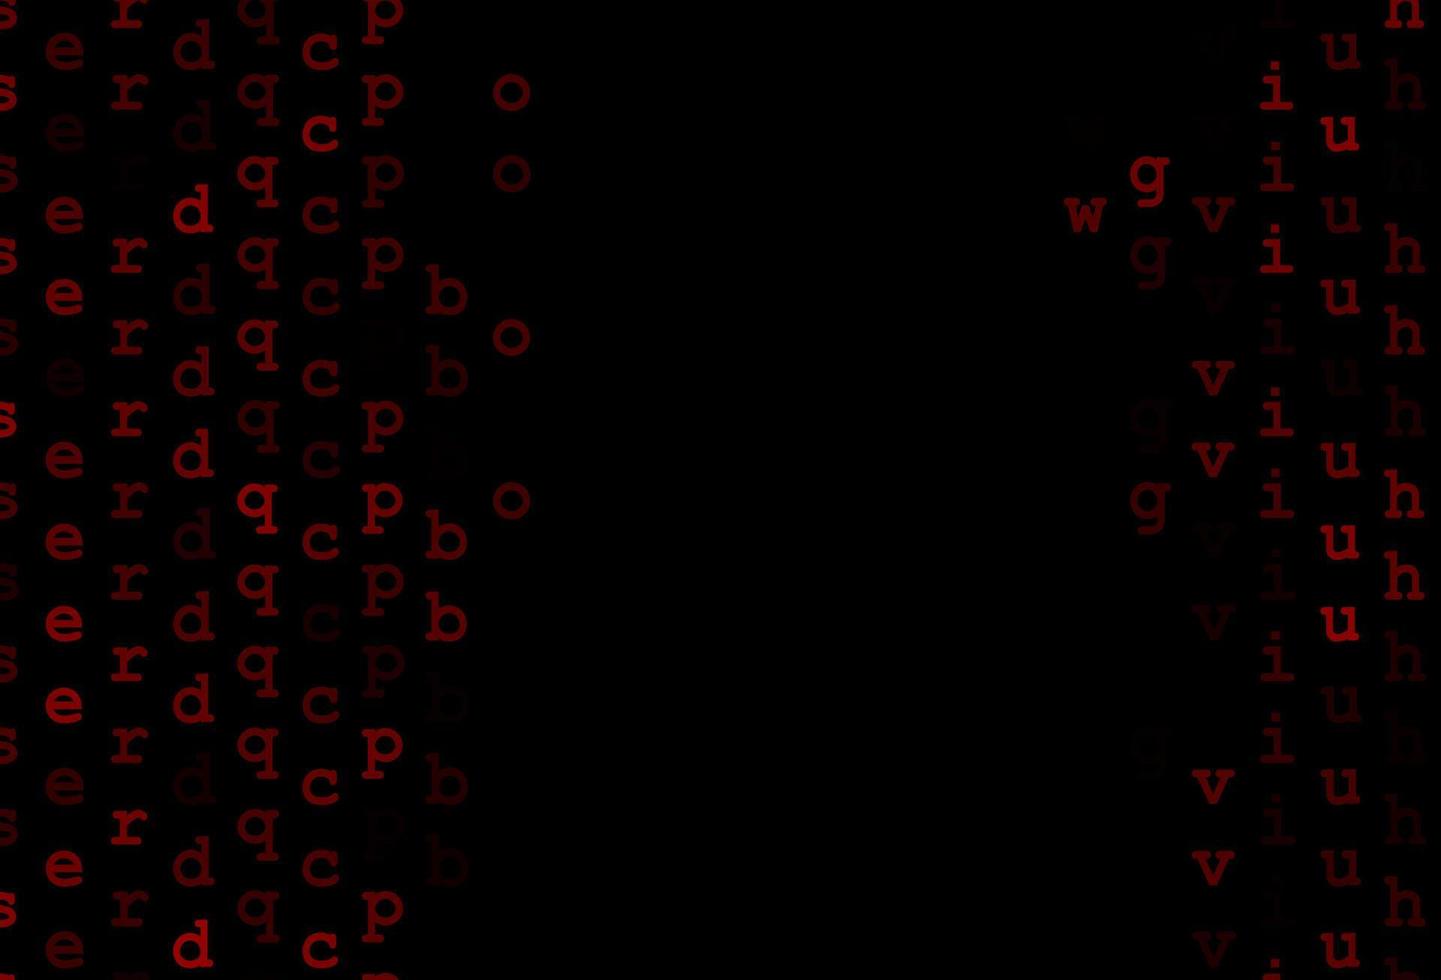 plantilla de vector rojo oscuro con letras aisladas.